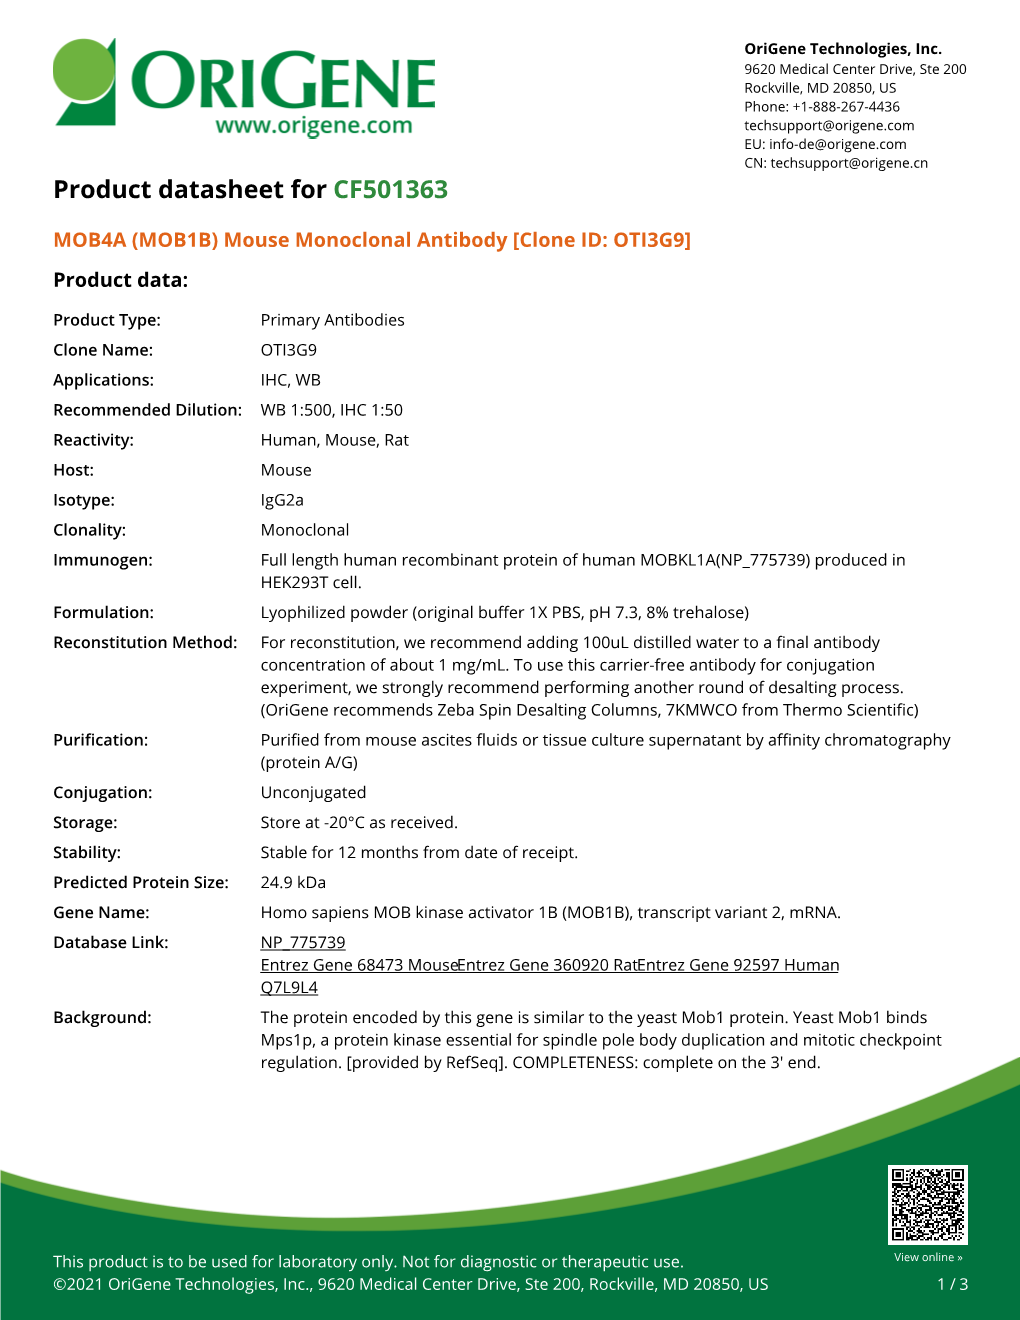 MOB4A (MOB1B) Mouse Monoclonal Antibody [Clone ID: OTI3G9] Product Data